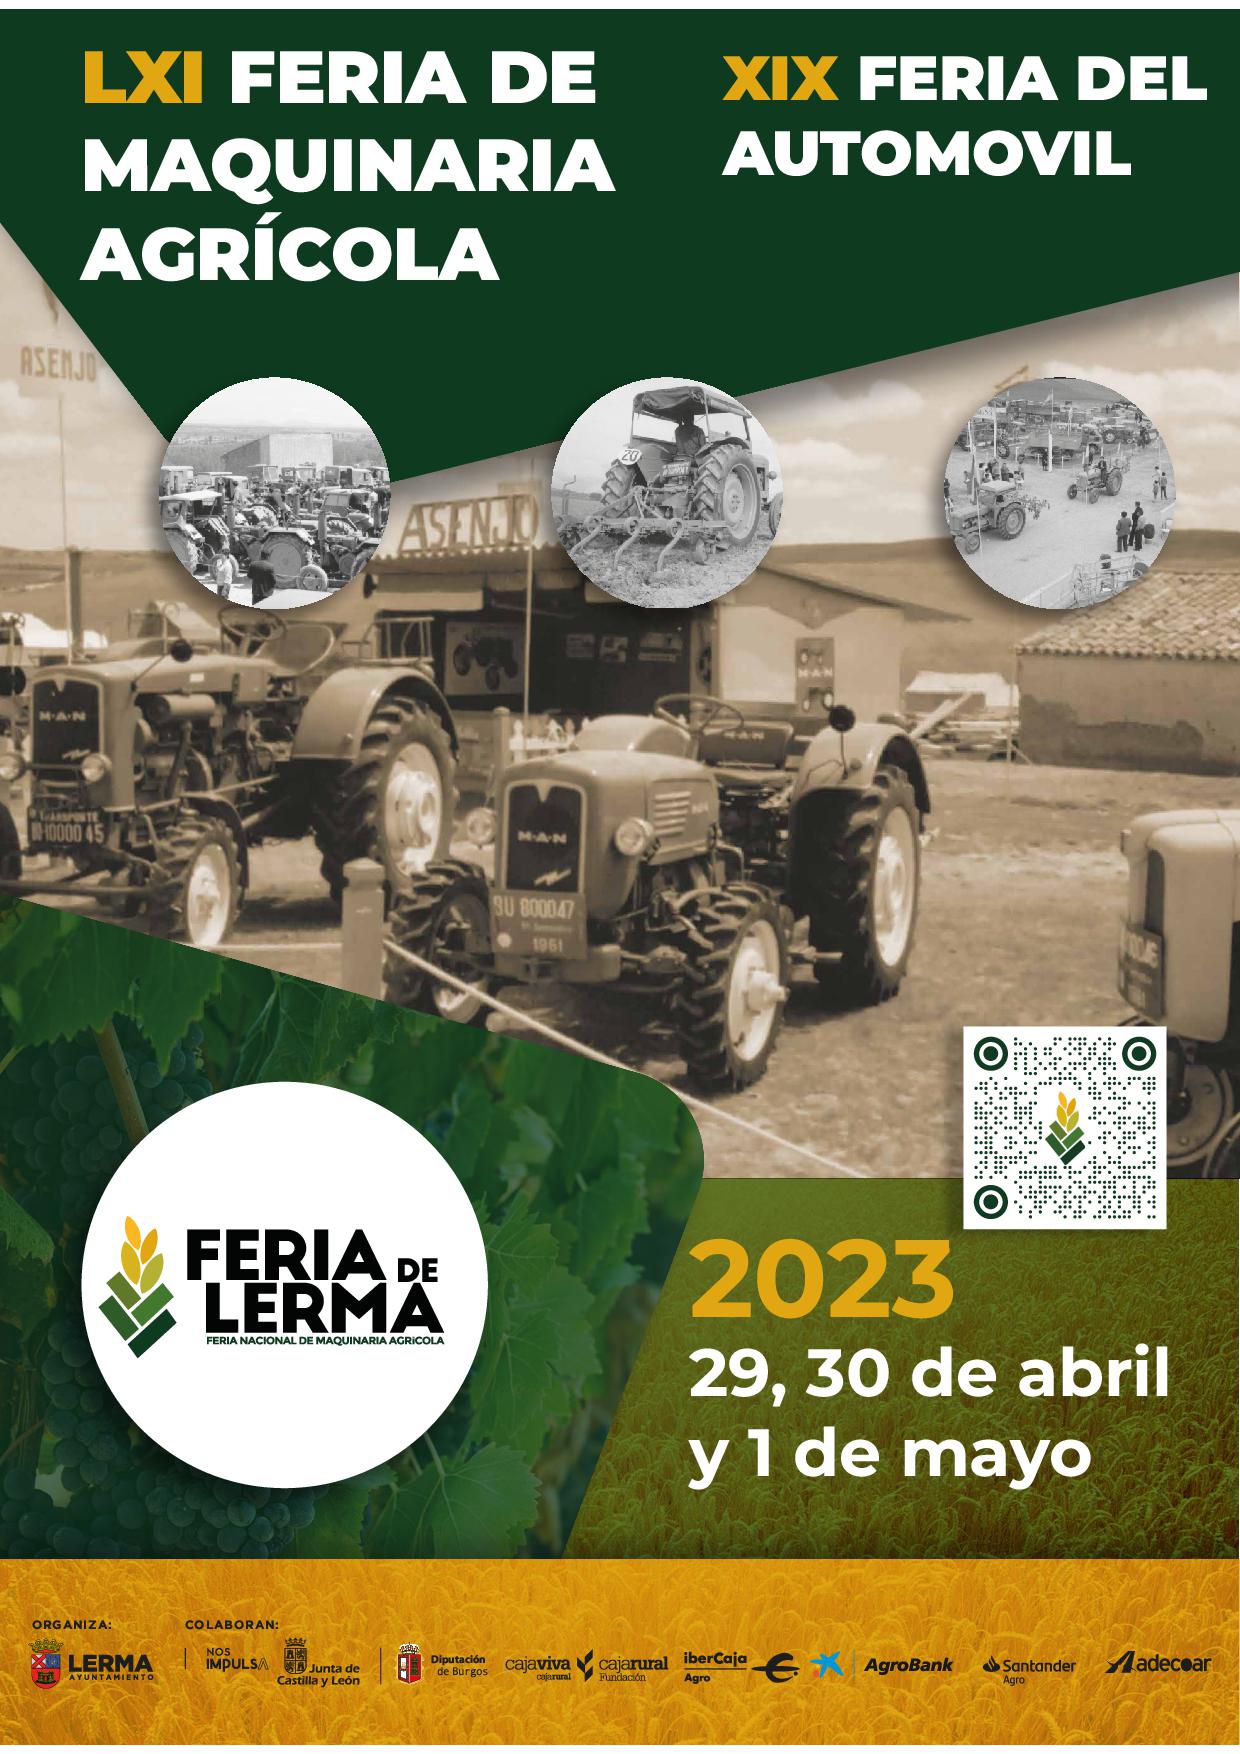 FERIA DE LERMA 2023